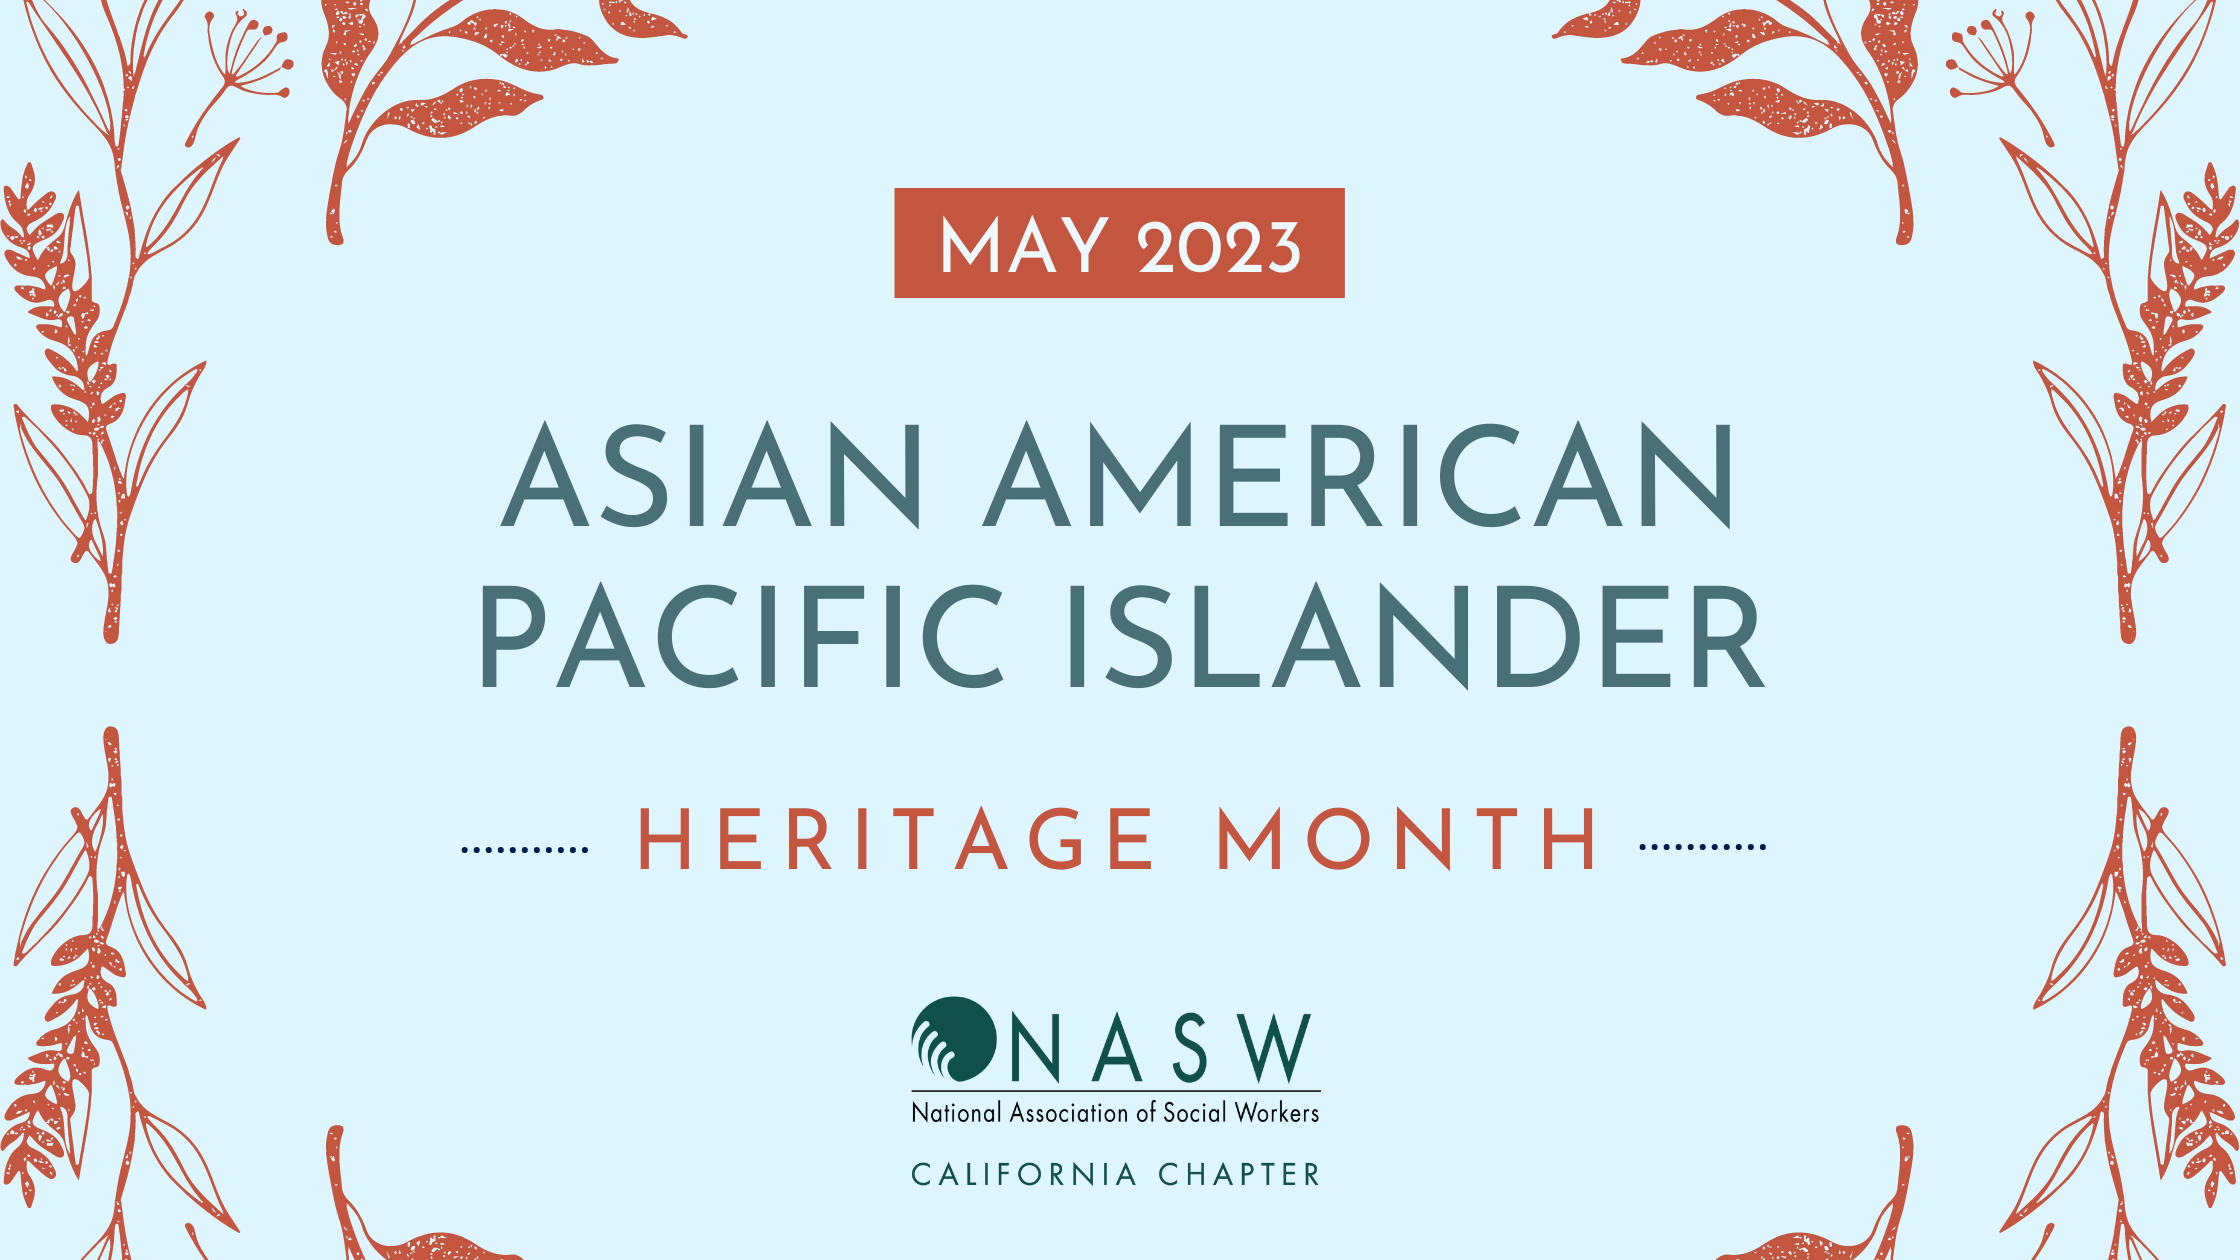 Honoring Asian American Pacific Islander Heritage Month ·